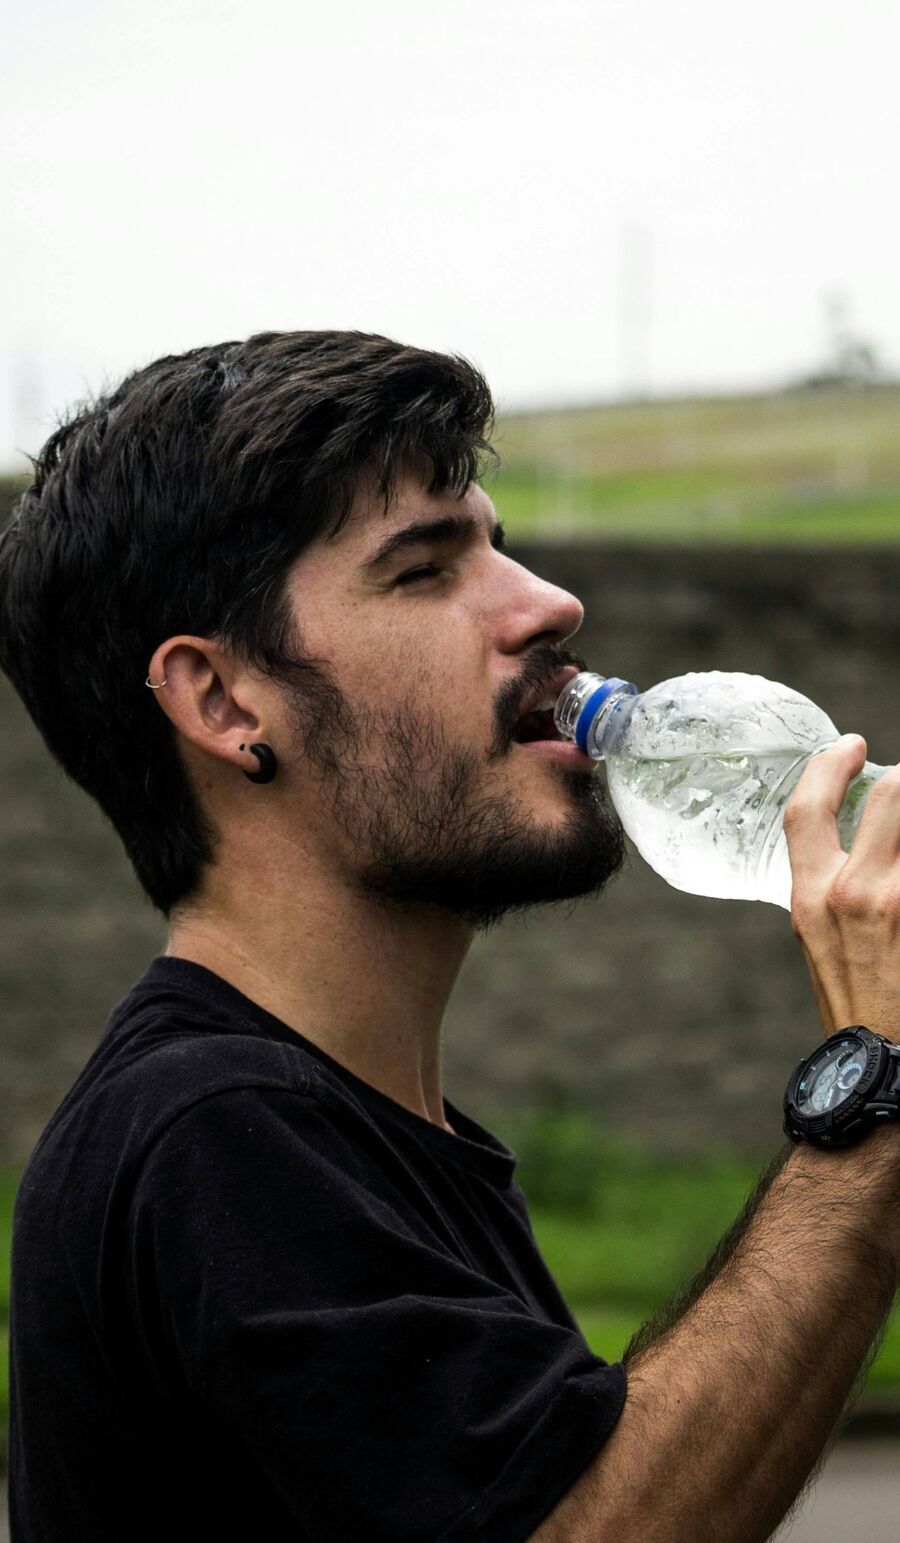 Water Drinking Tips: দাঁড়িয়ে জল পান করলে কোন রোগ হয়?